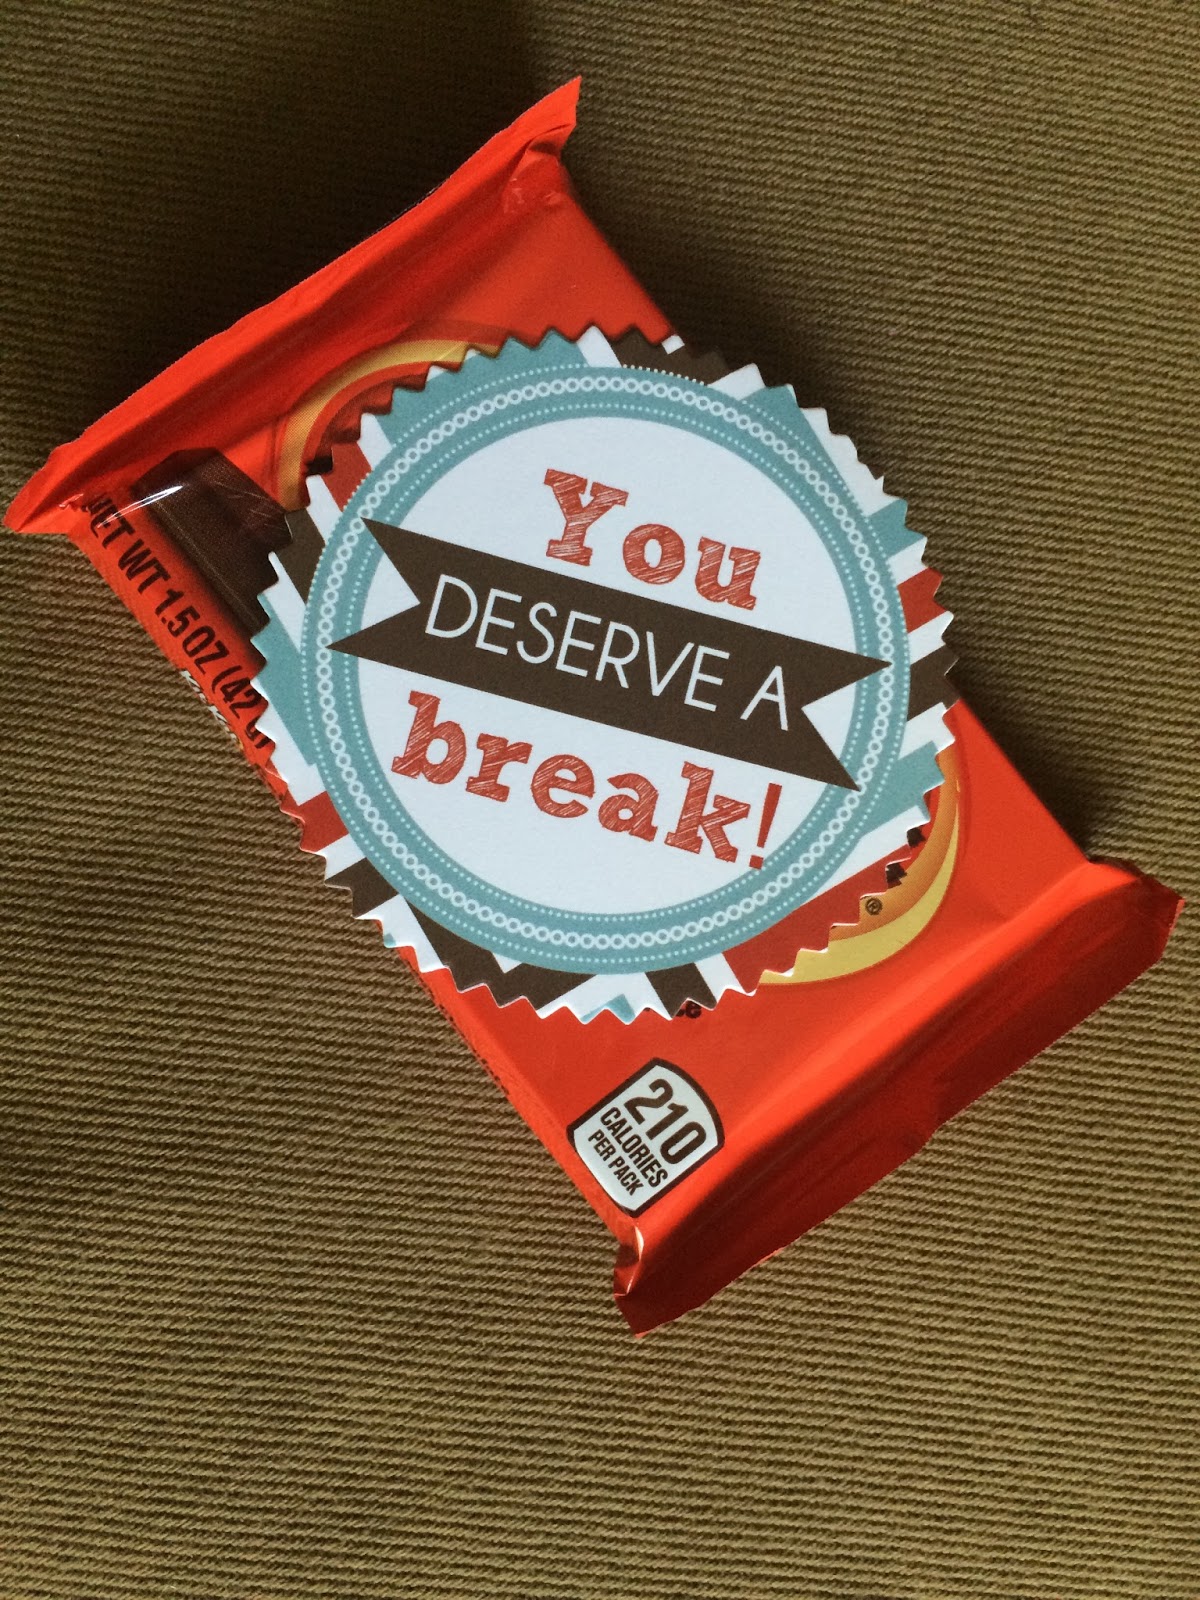 You Deserve A Break Kit Kat Printable leafonsand